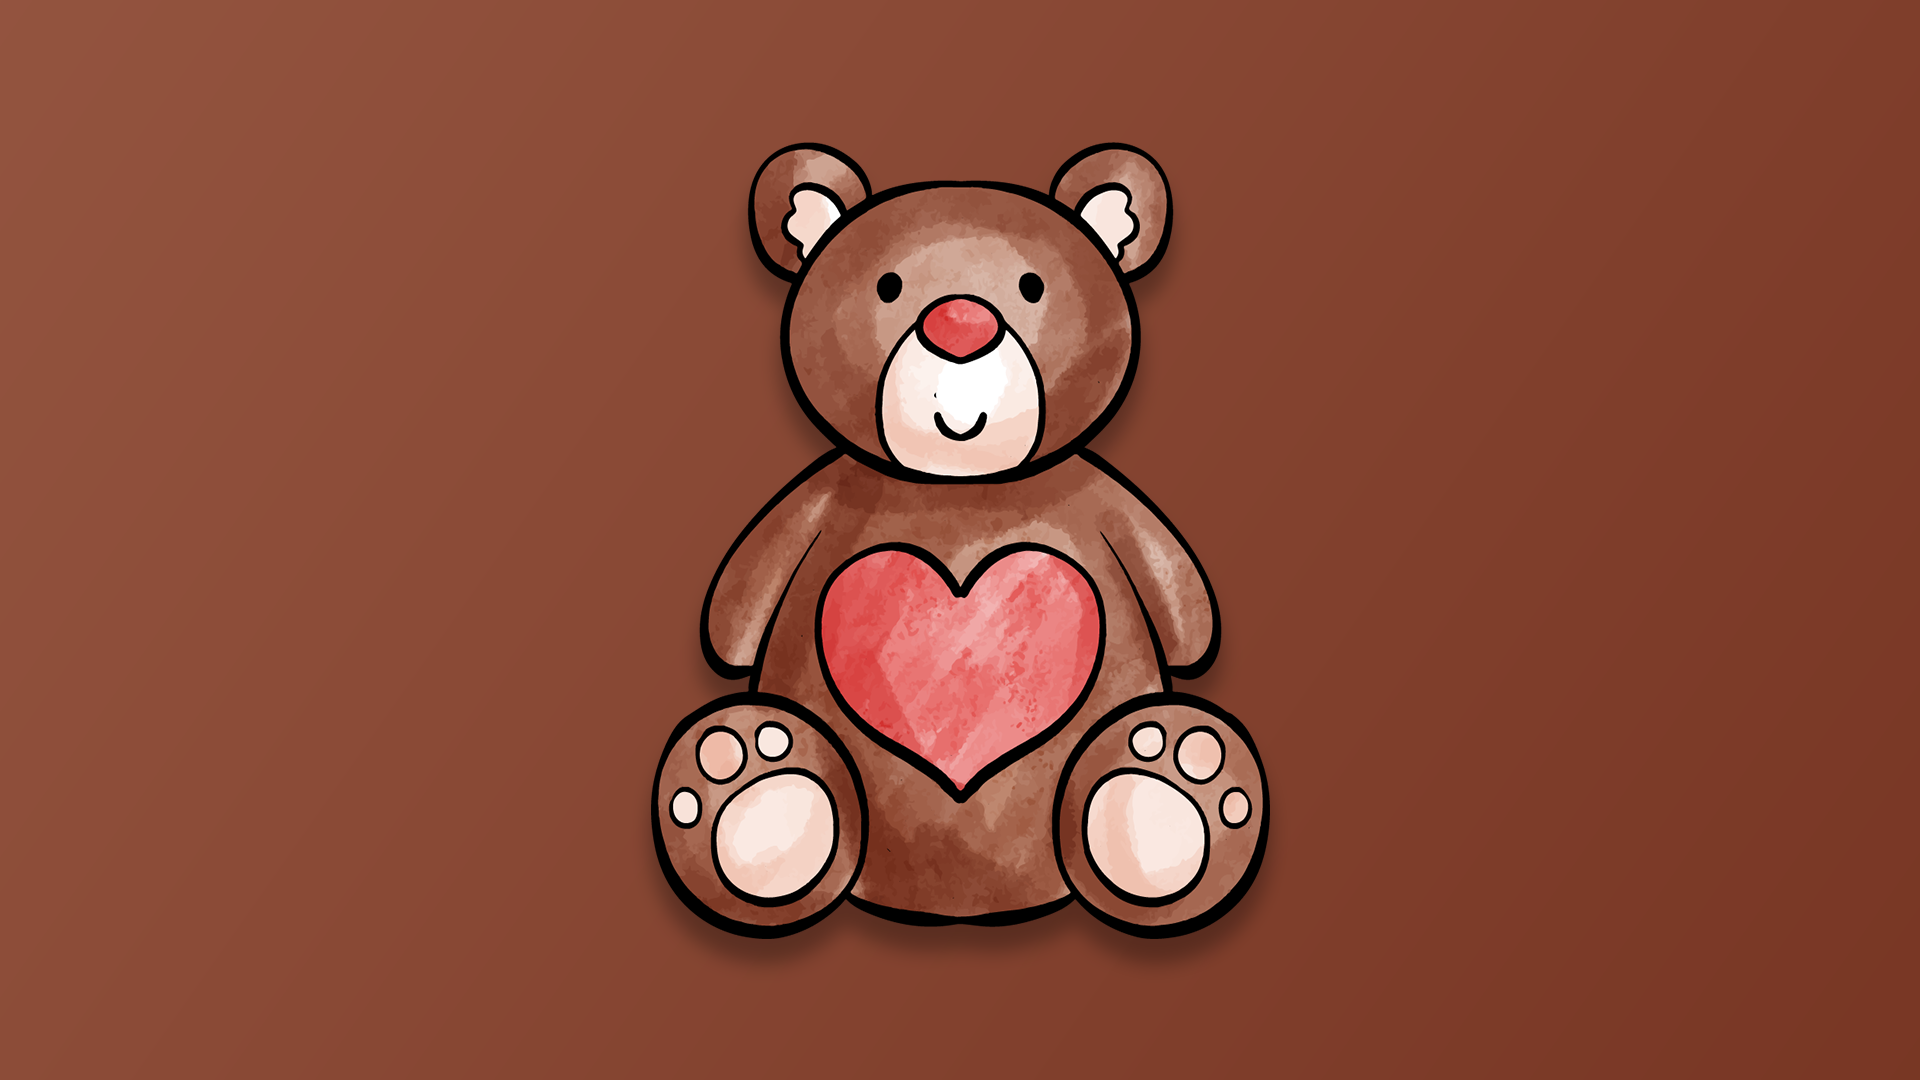 General 1920x1080 Valentine's Day digital art teddy bears heart simple background heart (design)